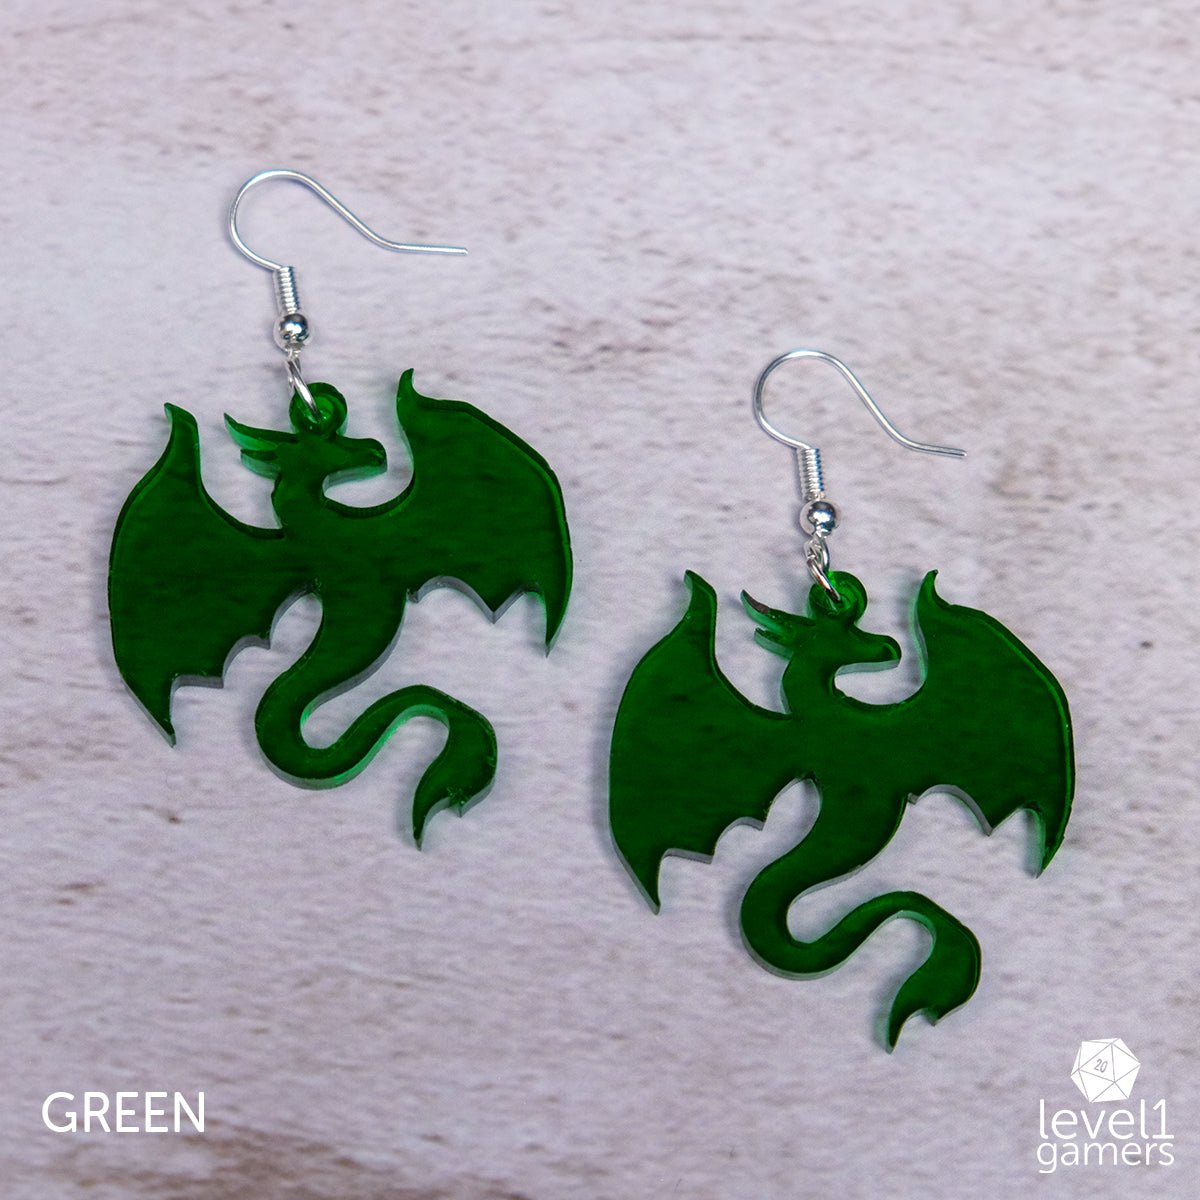 Dragon Acrylic Earrings  Level 1 Gamers Pendant Green 